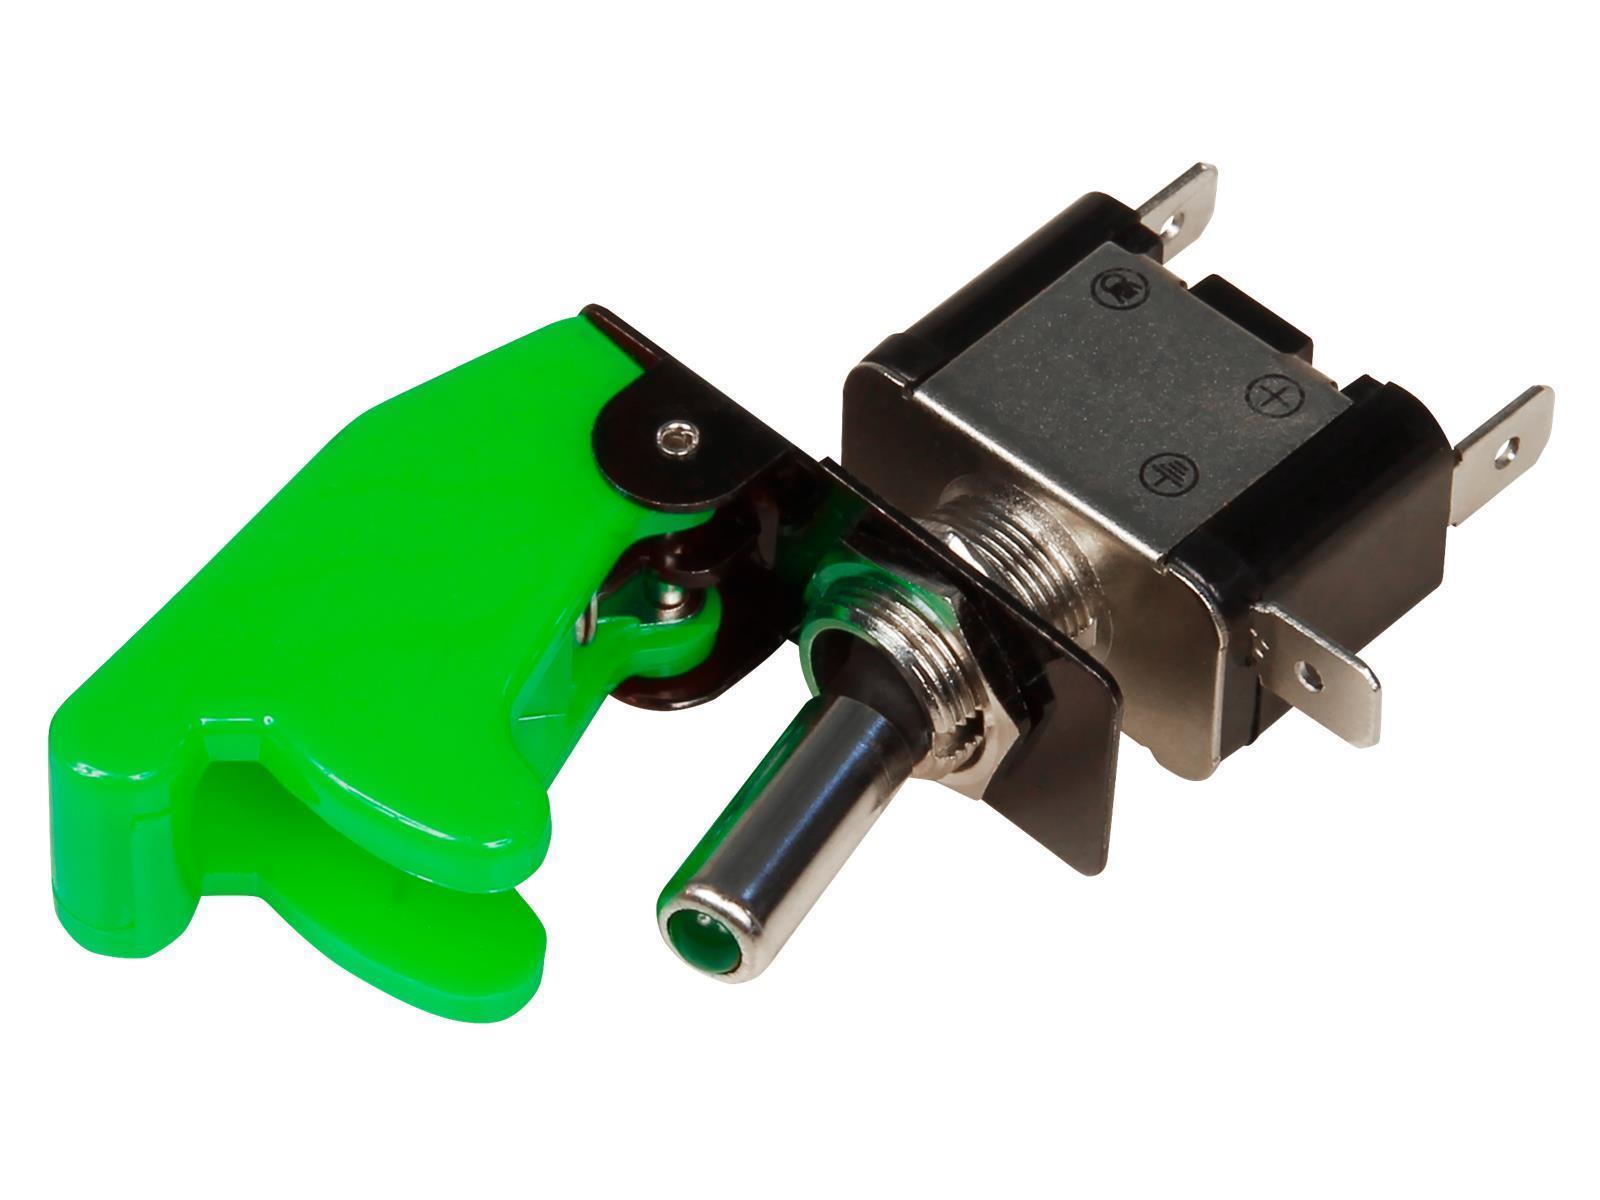 Kill-Switch McPower mit Schutzkappe und LED, 12V / 20A, grün